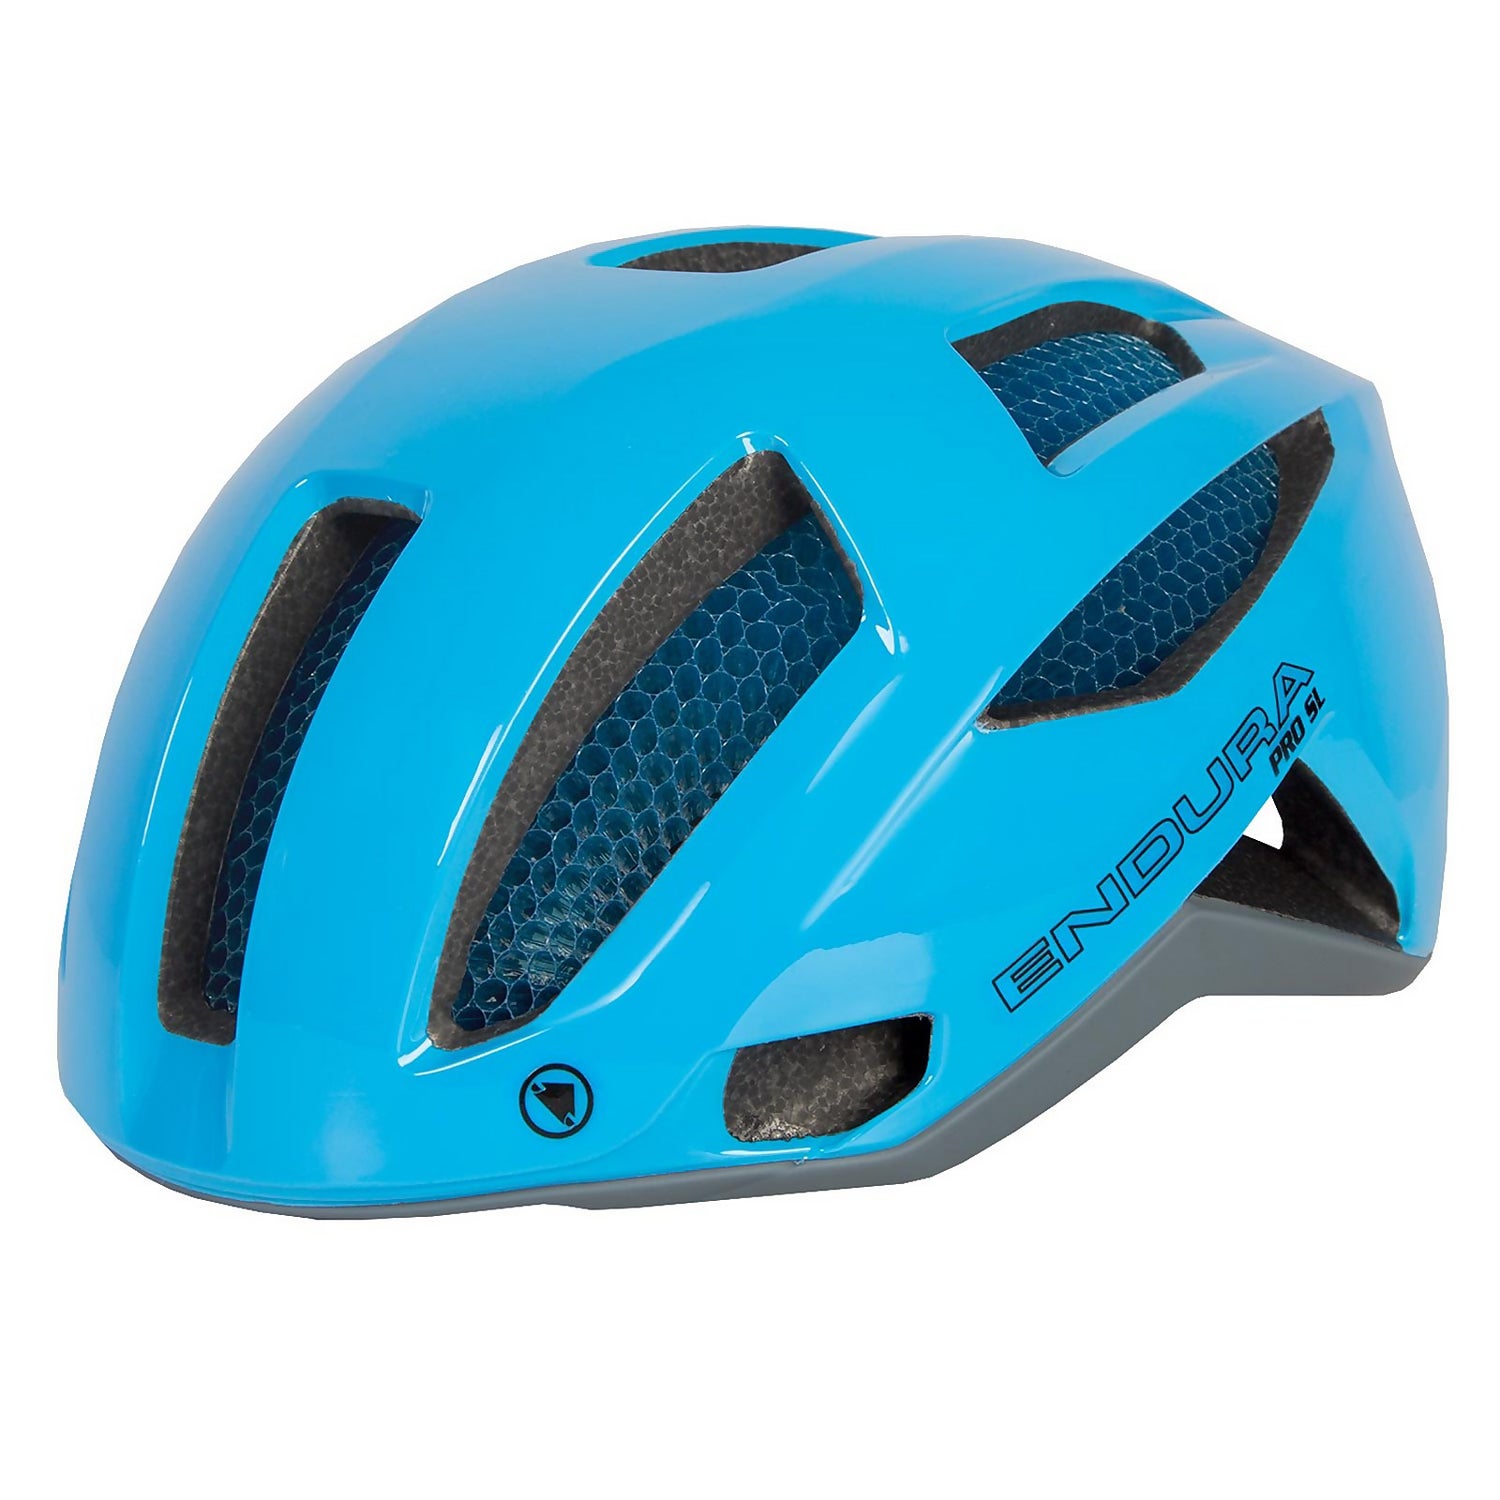 Pro SL Helmet - Hi-Viz Blue - S-M